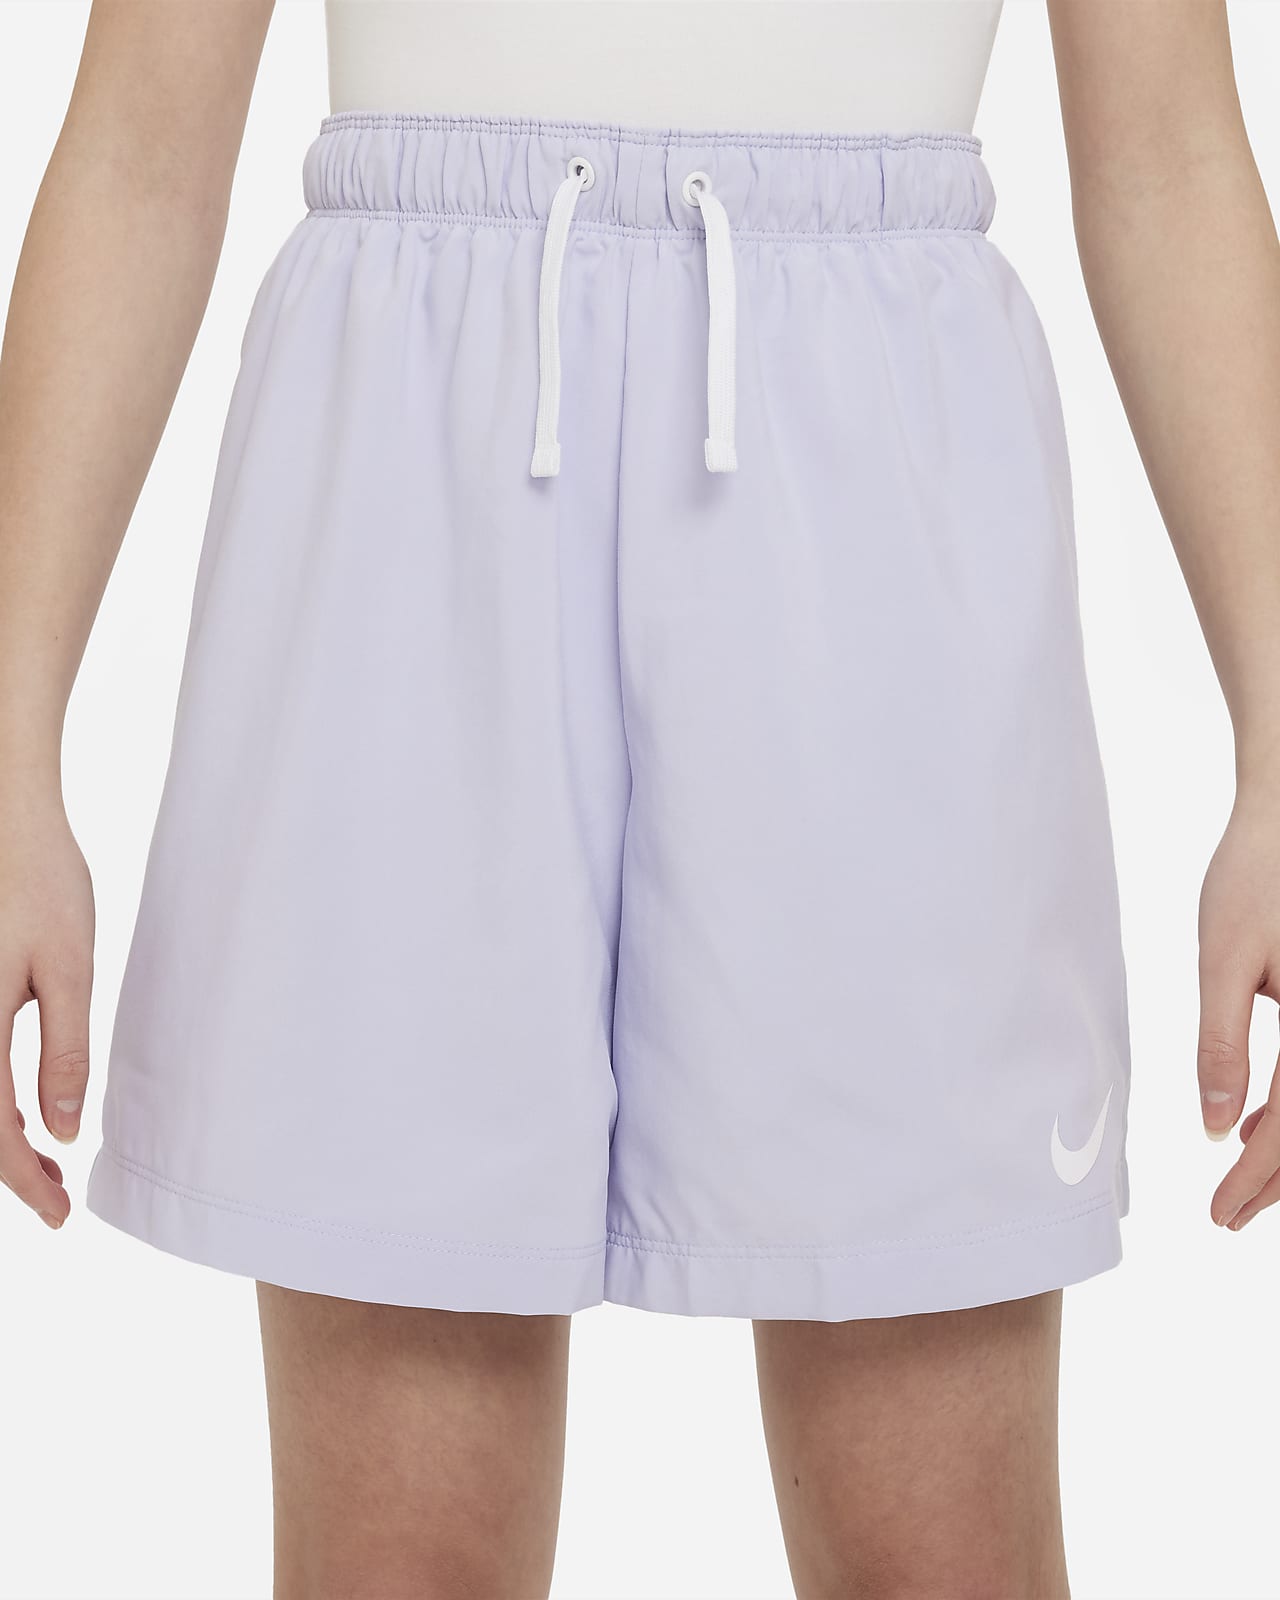 Nike Sportswear Older Kids' (Girls') High-Waisted Woven Cargo Trousers.  Nike ID